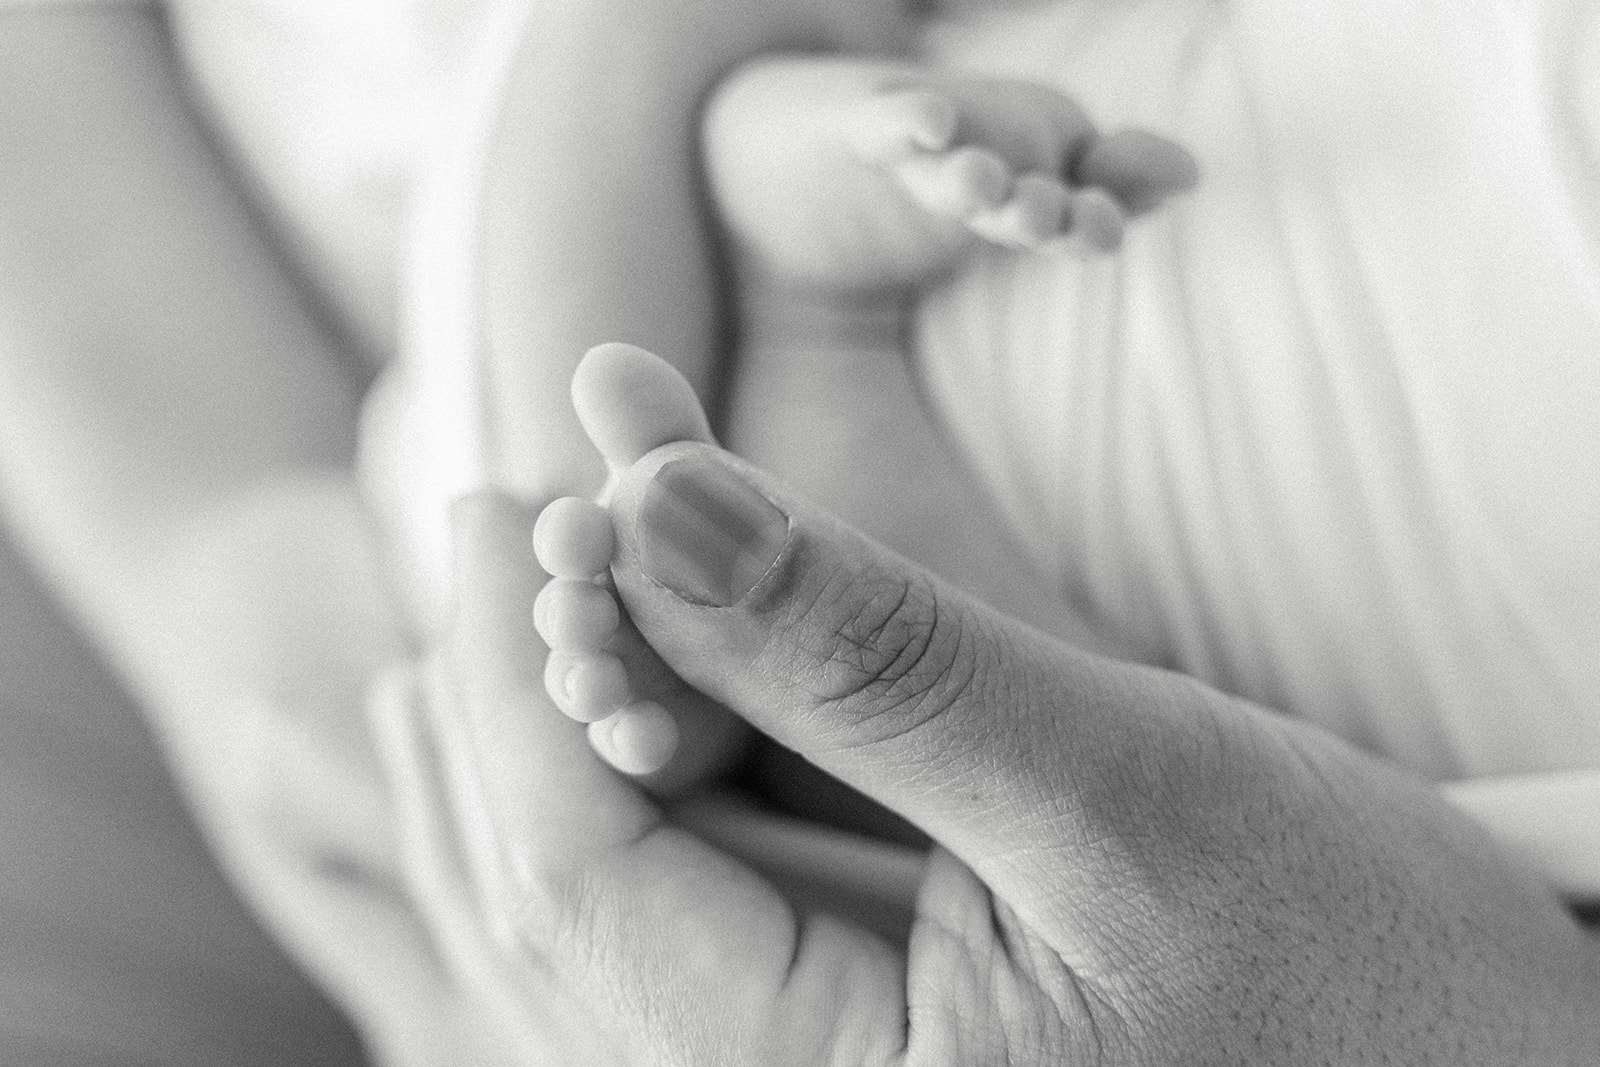 Details of a newborn baby foot in dad's hands